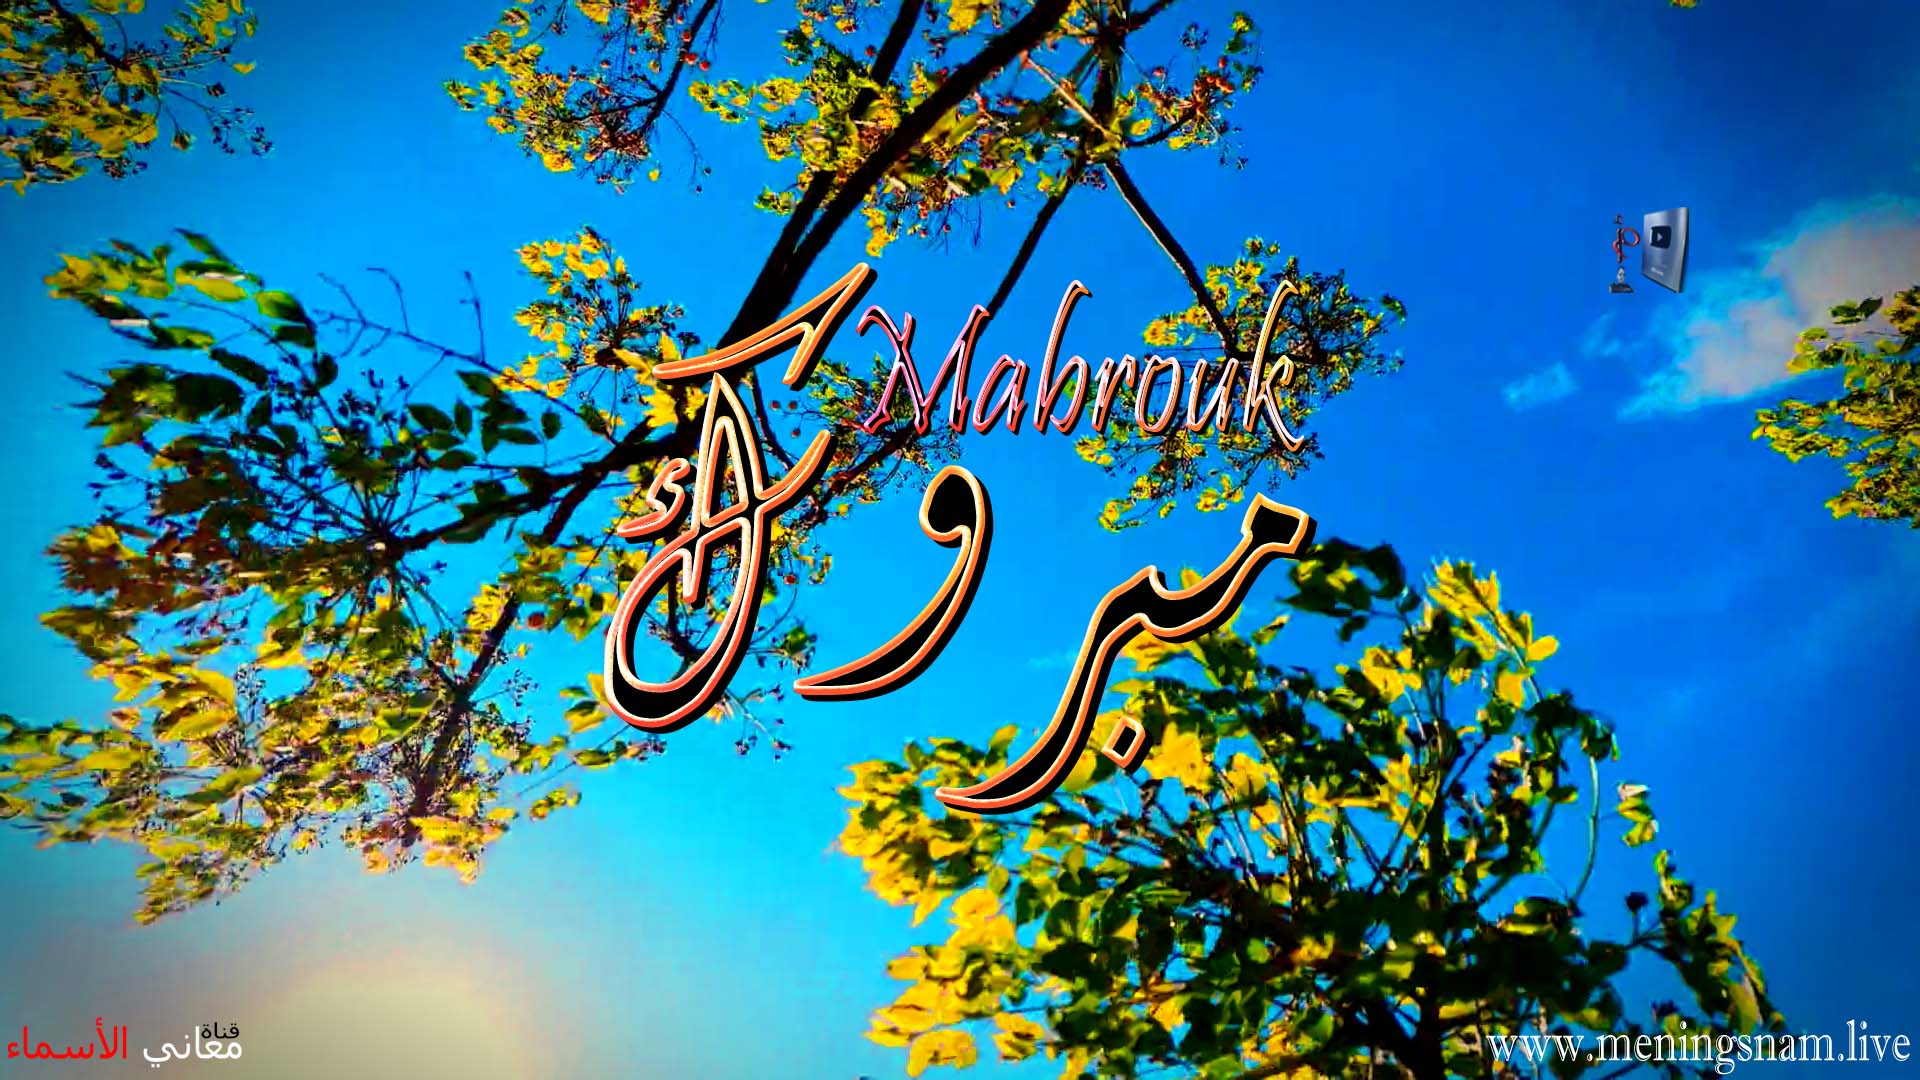 معنى اسم, مبروك, وصفات, حامل, هذا الاسم, Mabrouk,